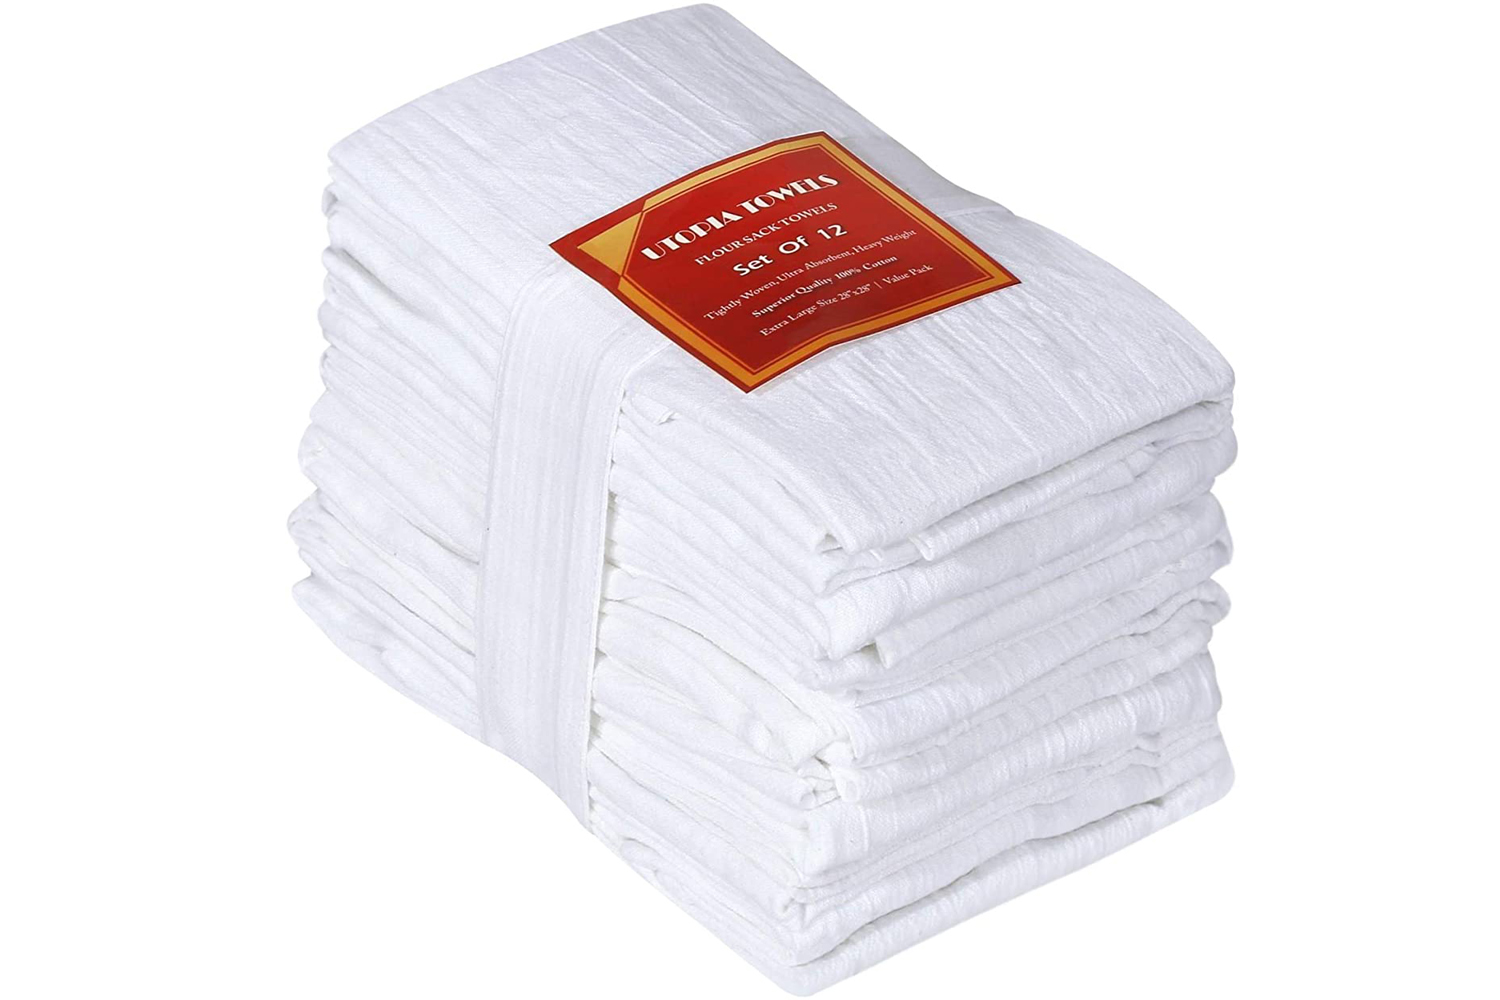 https://www.themanual.com/wp-content/uploads/sites/9/2021/02/utopia-kitchen-flour-sack-dish-towels.jpg?fit=800%2C533&p=1